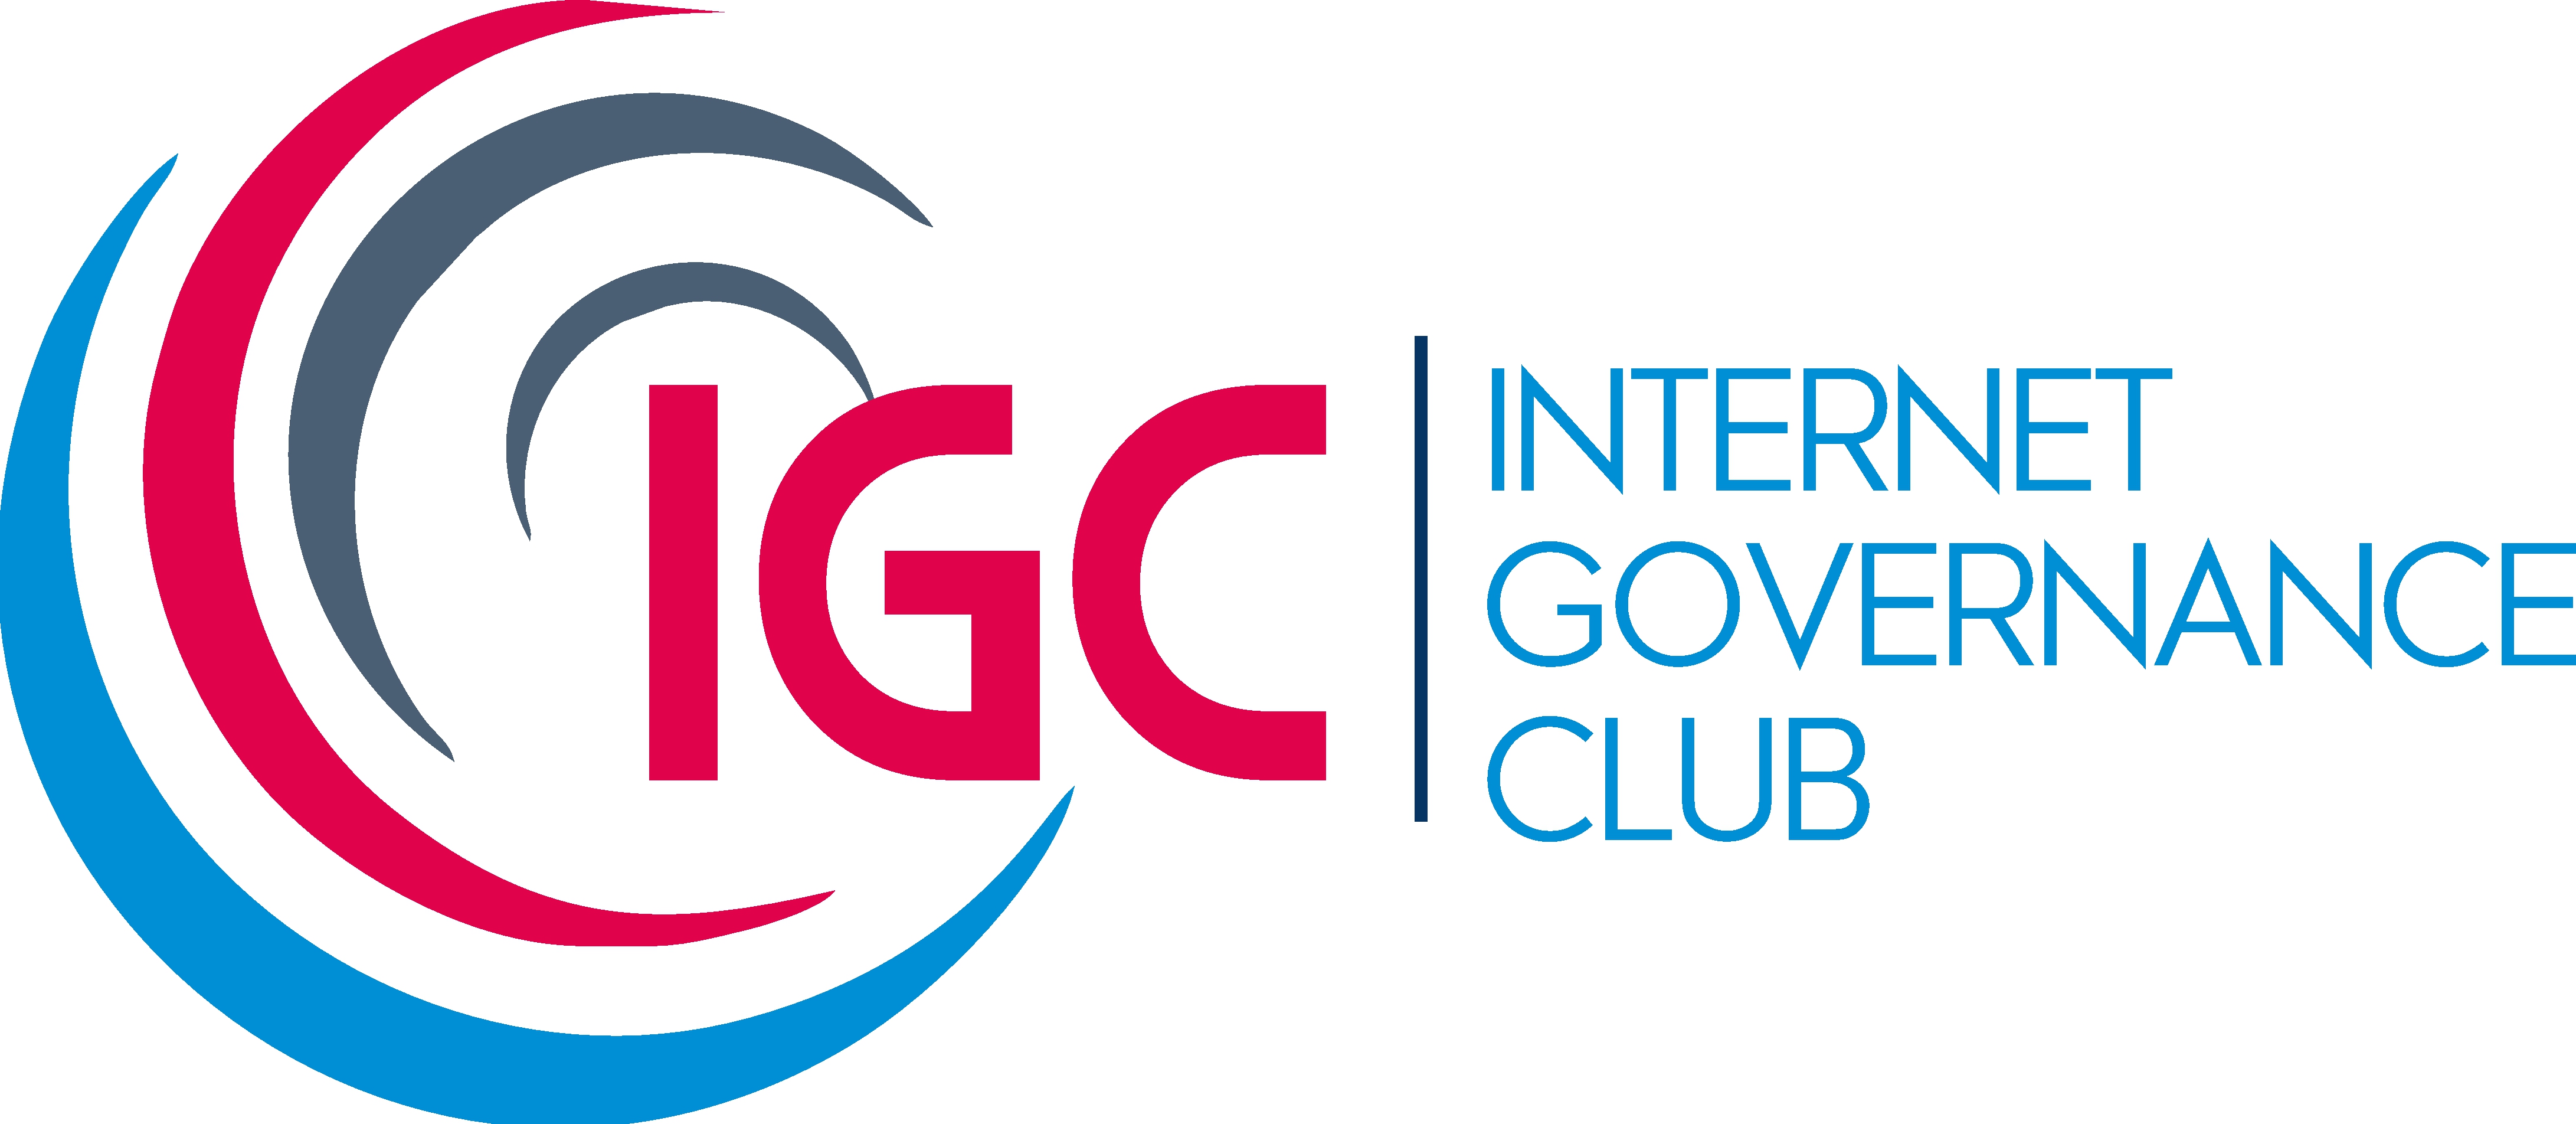 Copy of Internet Governance Club